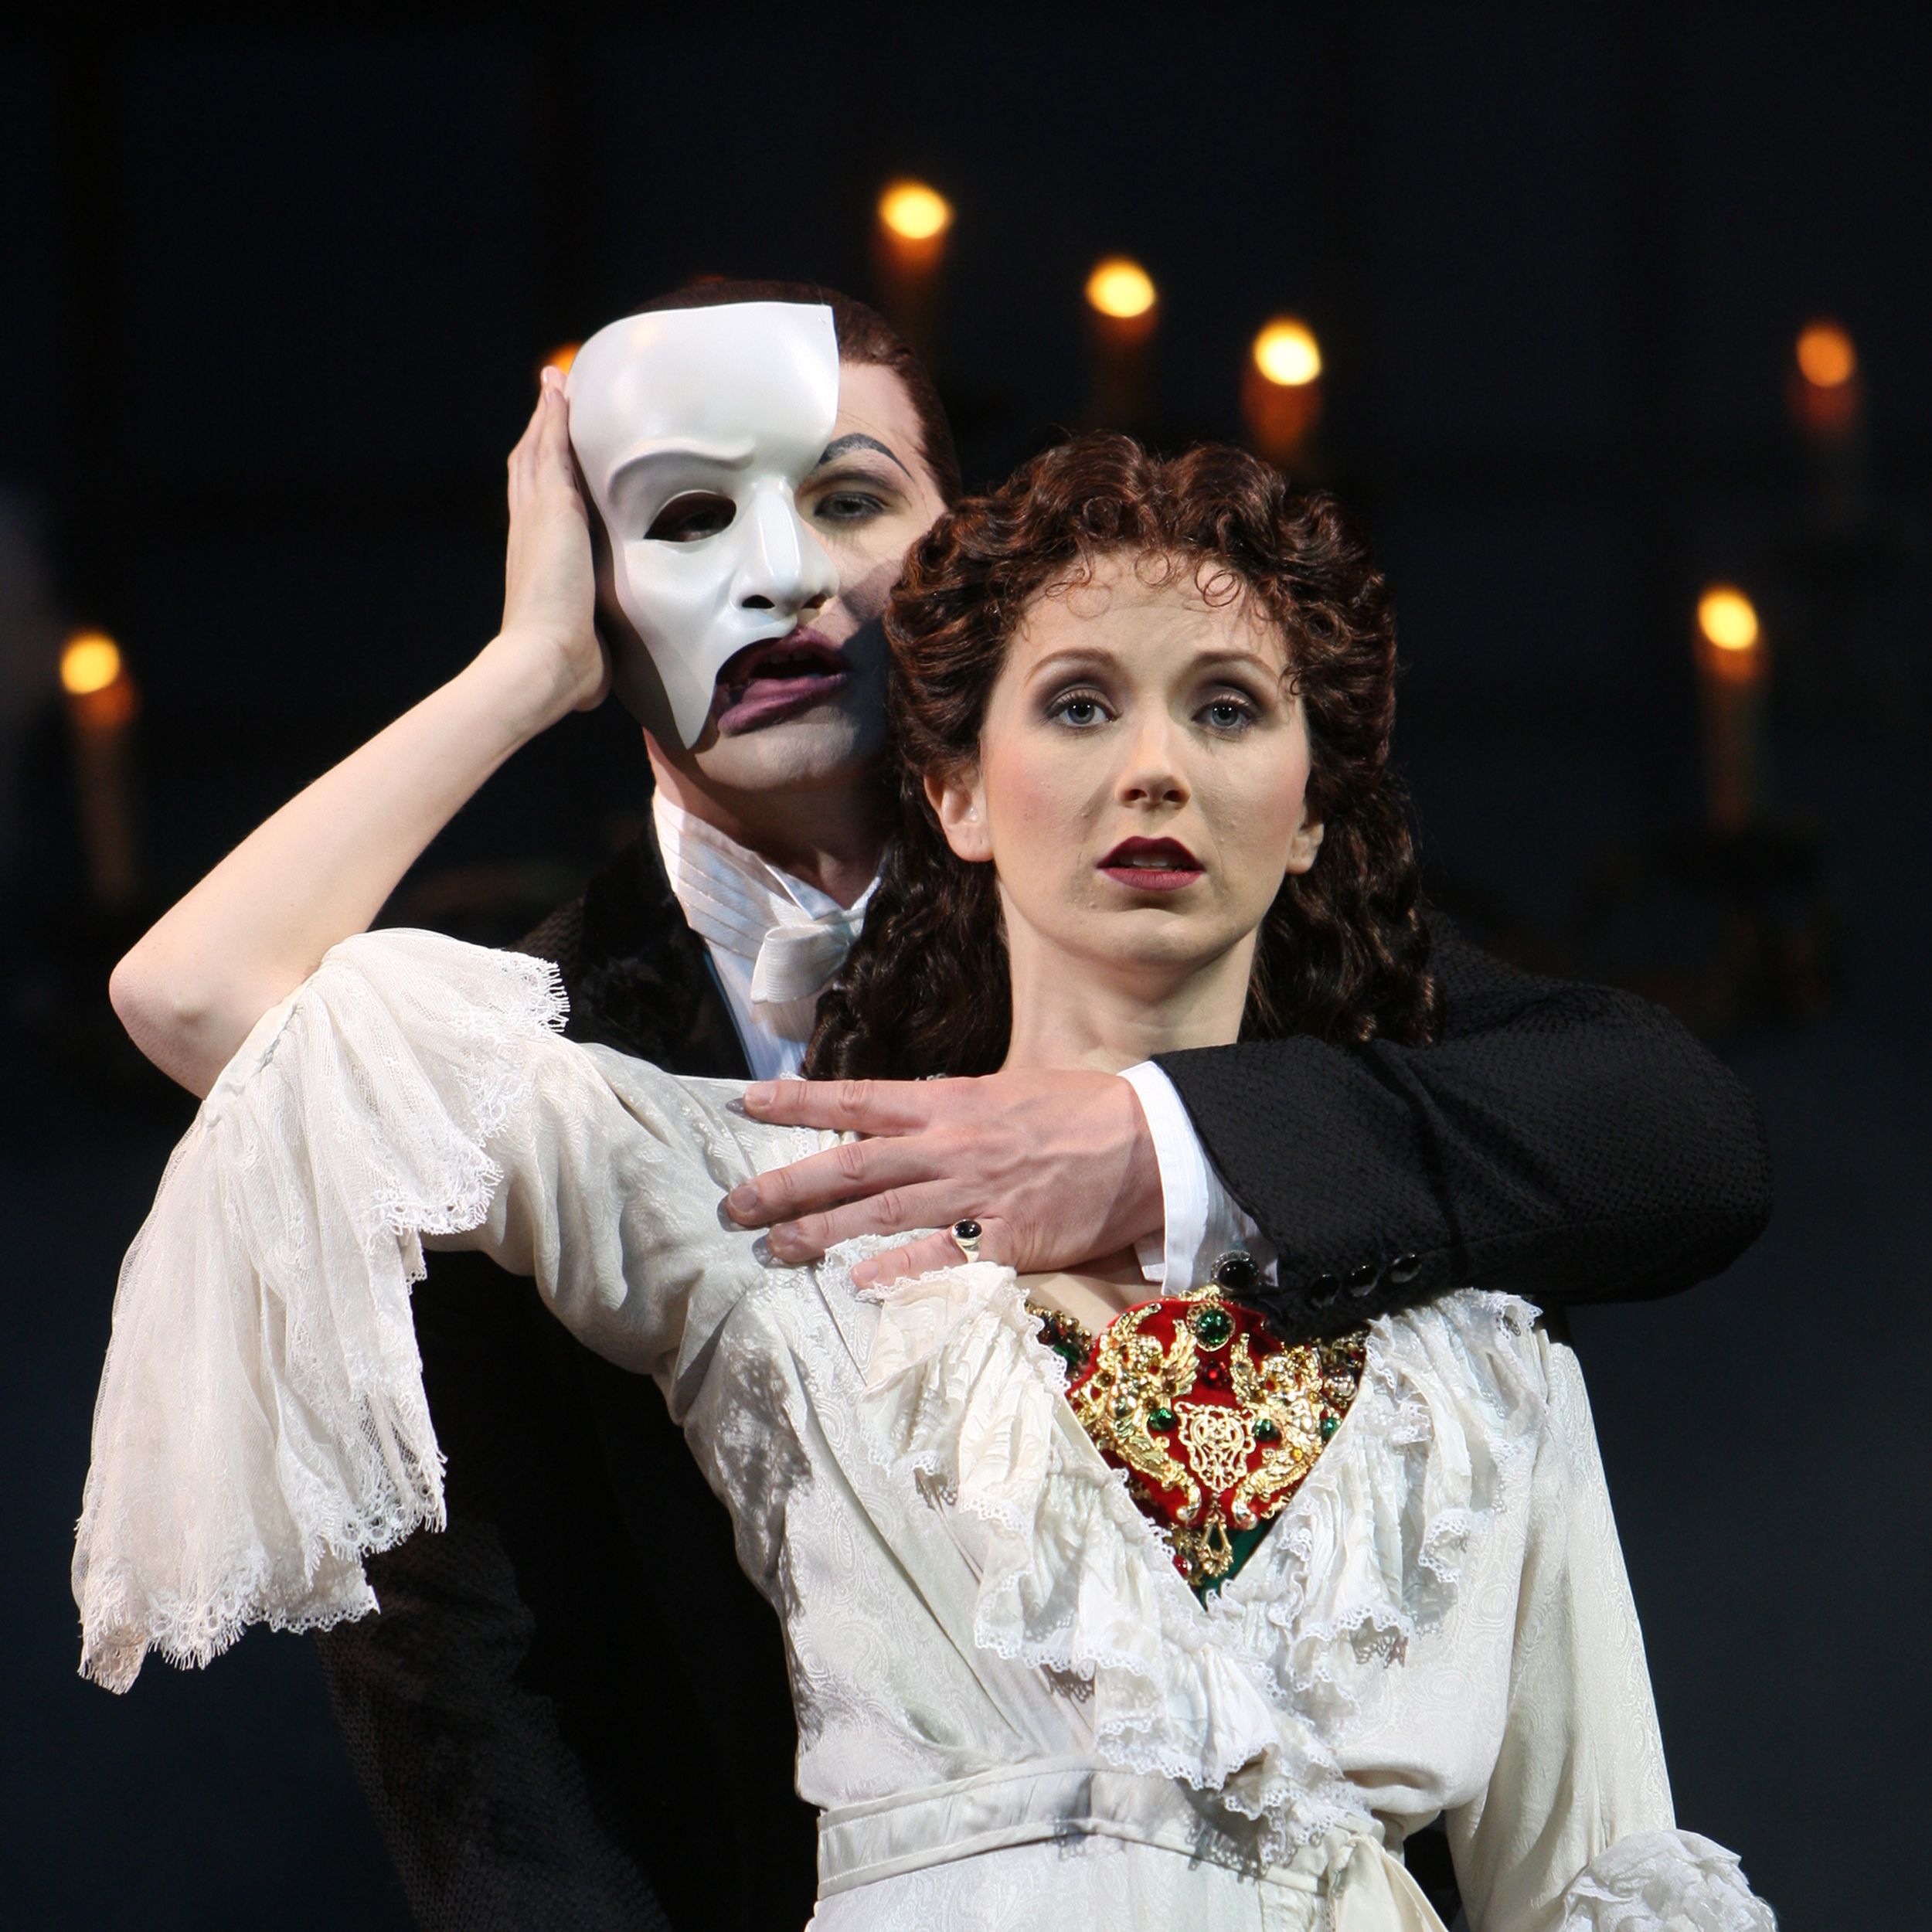 christine phantom of the opera costume halloween